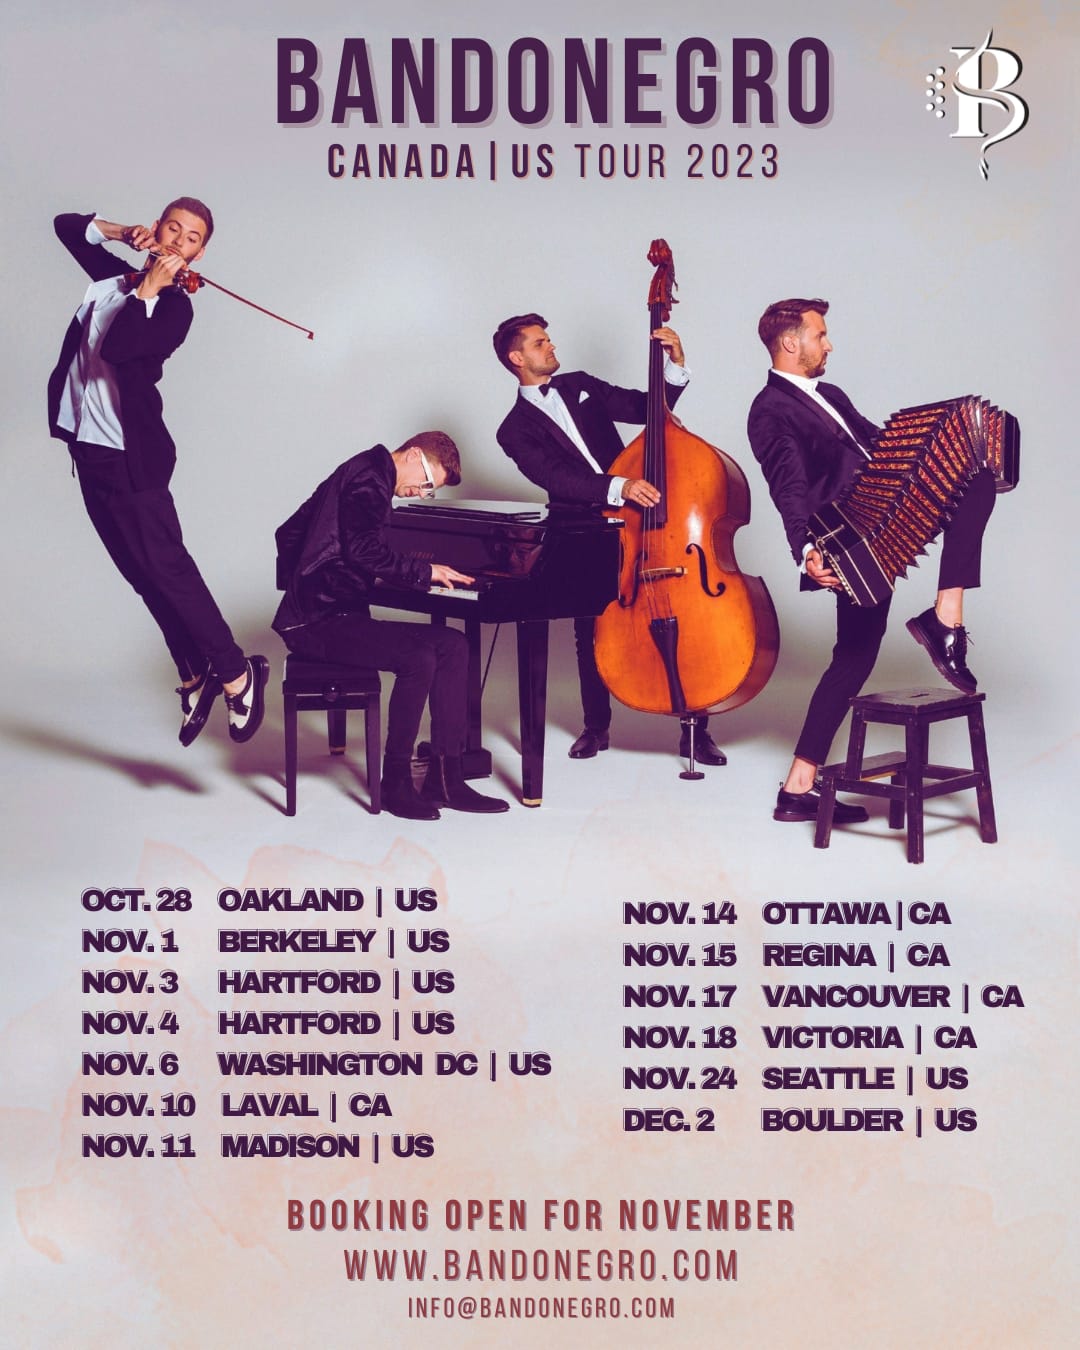 USA & CANADA TOUR – Seattle